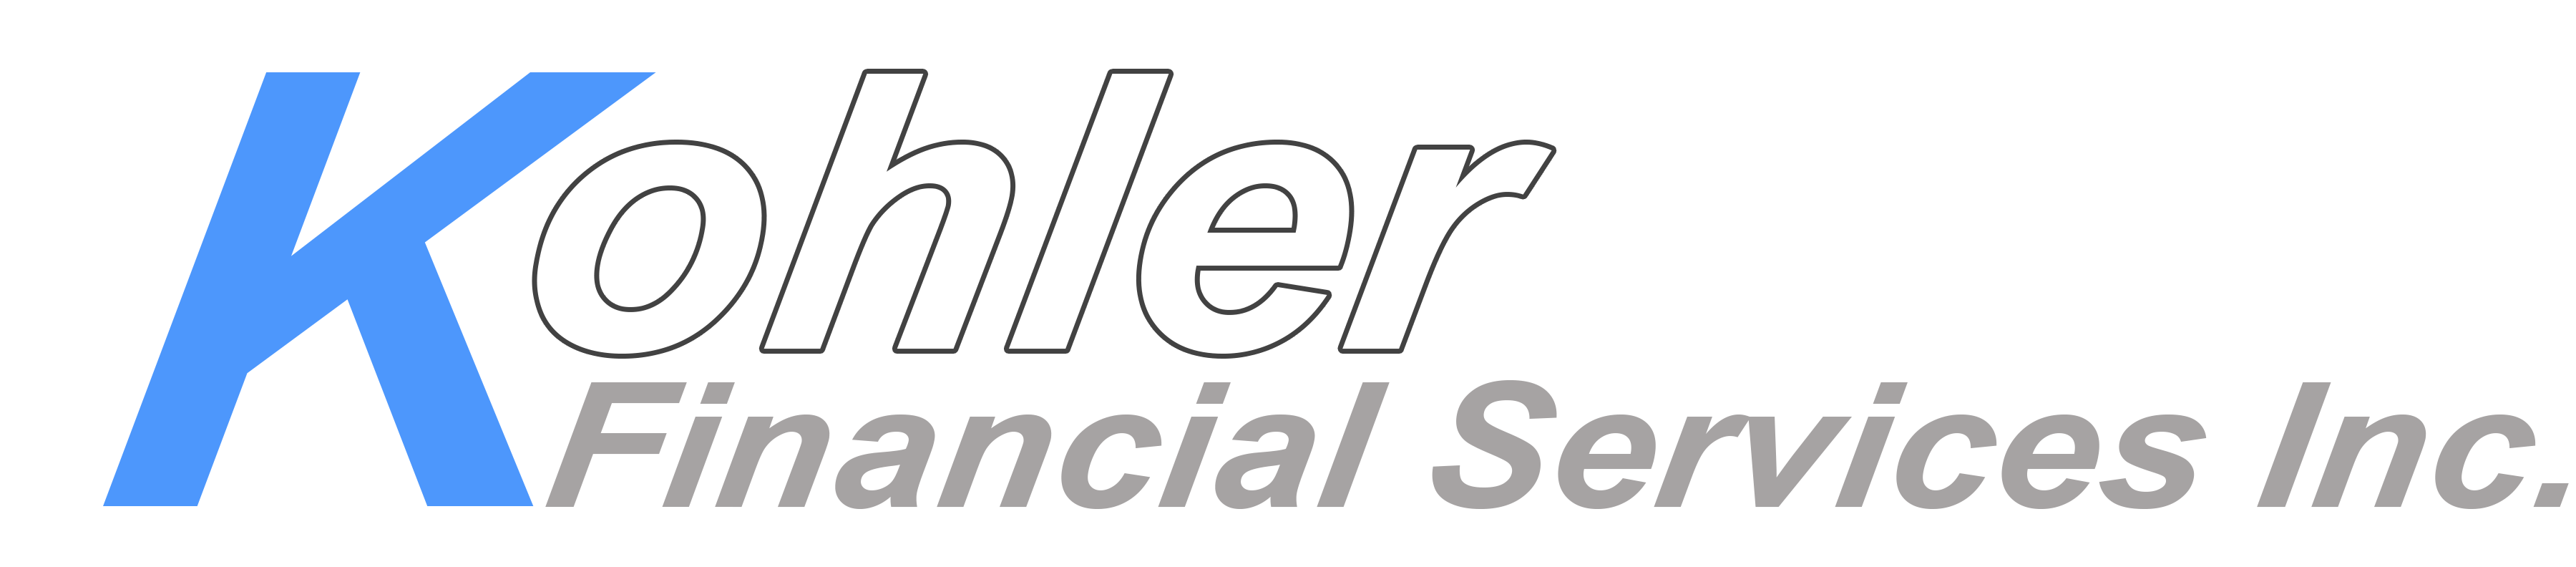 Kohler Financial Services Inc.